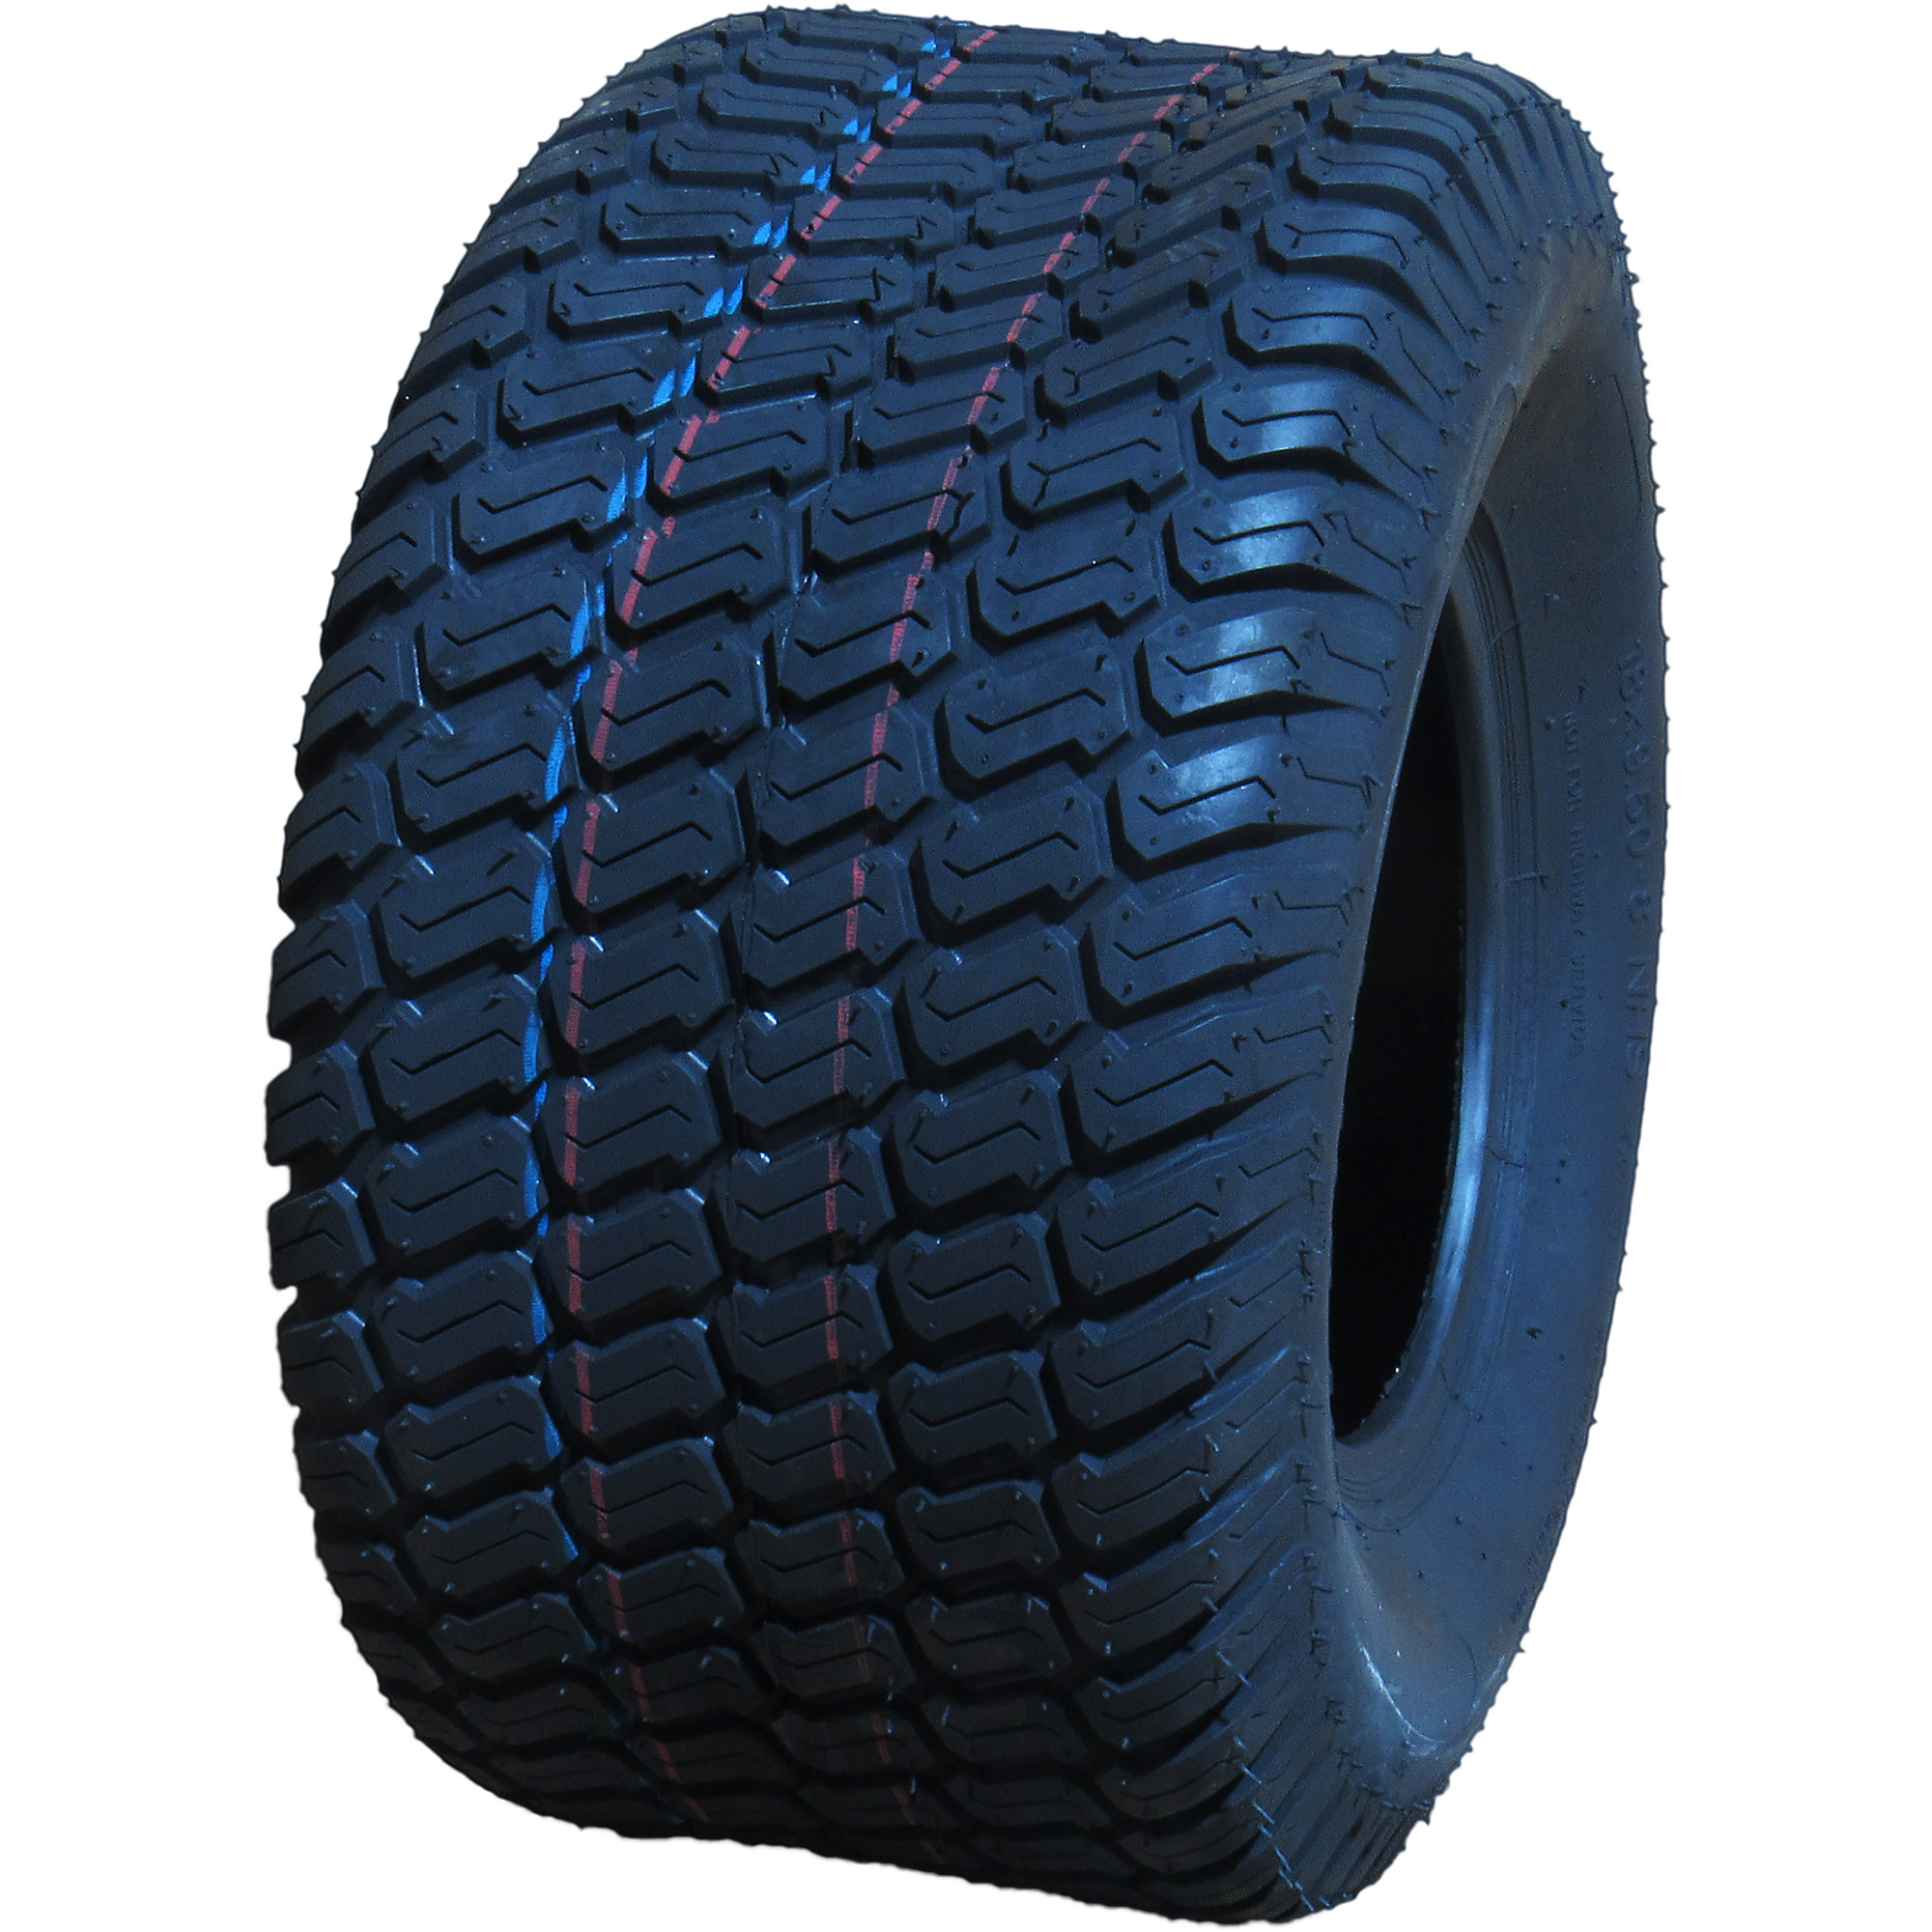 HI-RUN, Lawn Garden Tire, SU05 Turf, Tire Size 18X9.50-8 Load Range Rating A, Model WD1033